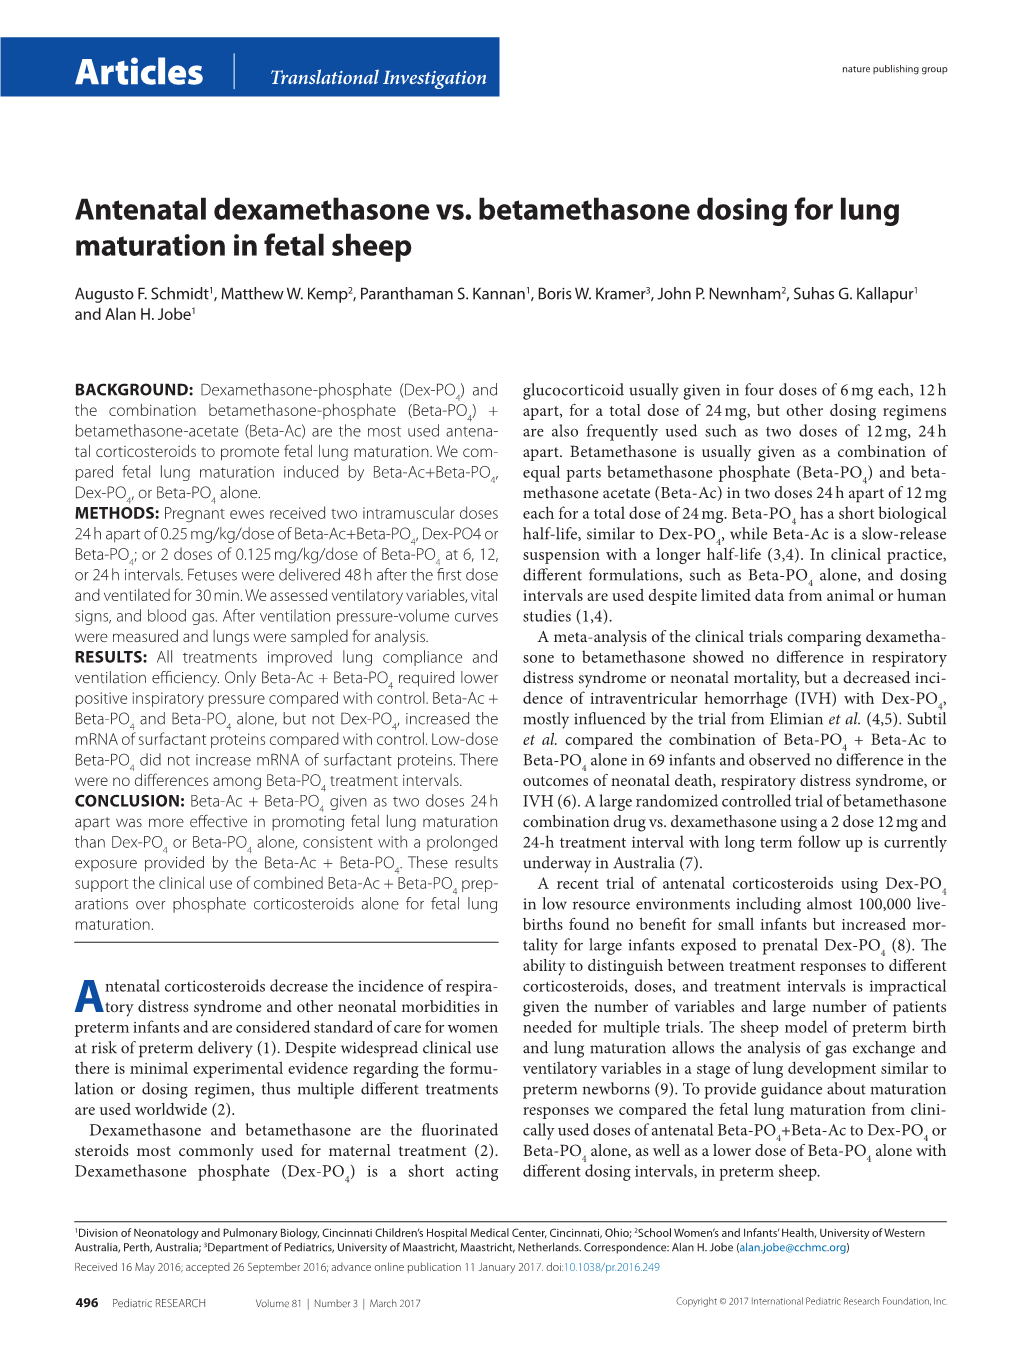 Antenatal Dexamethasone Vs. Betamethasone Dosing for Lung Maturation in Fetal Sheep